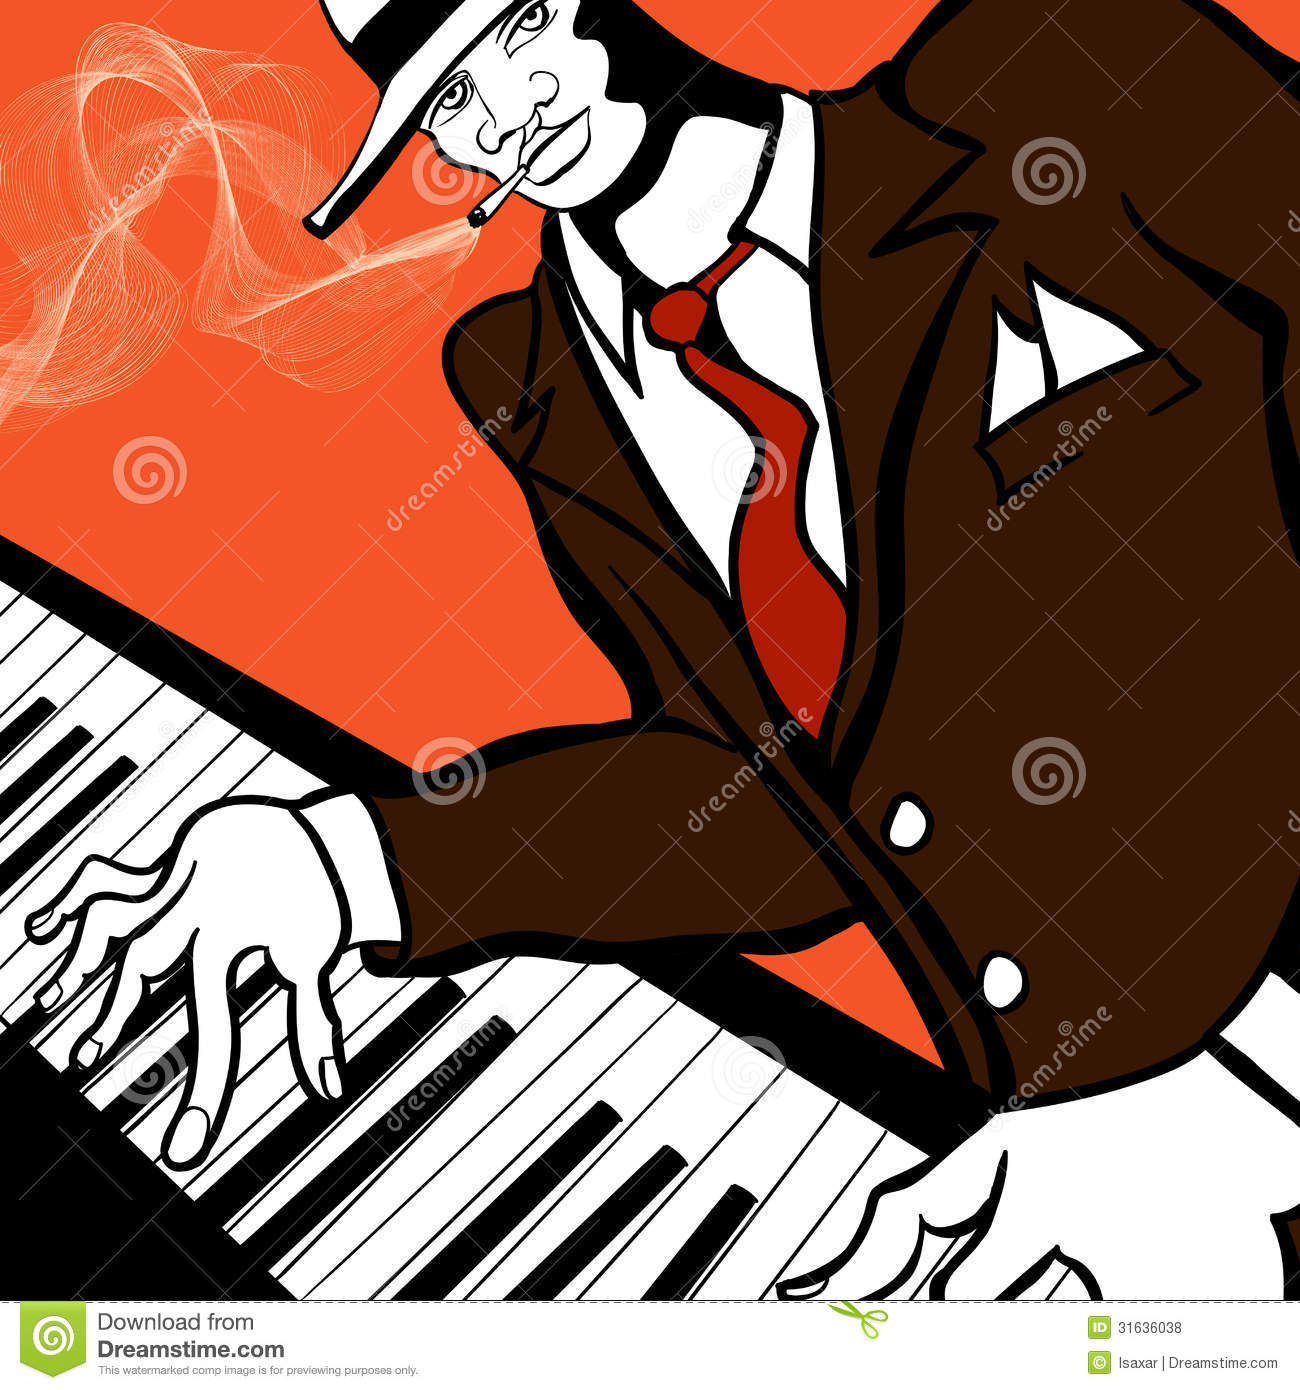 Jazz Piano Player Royalty Free Stock Photos   Image  31636038